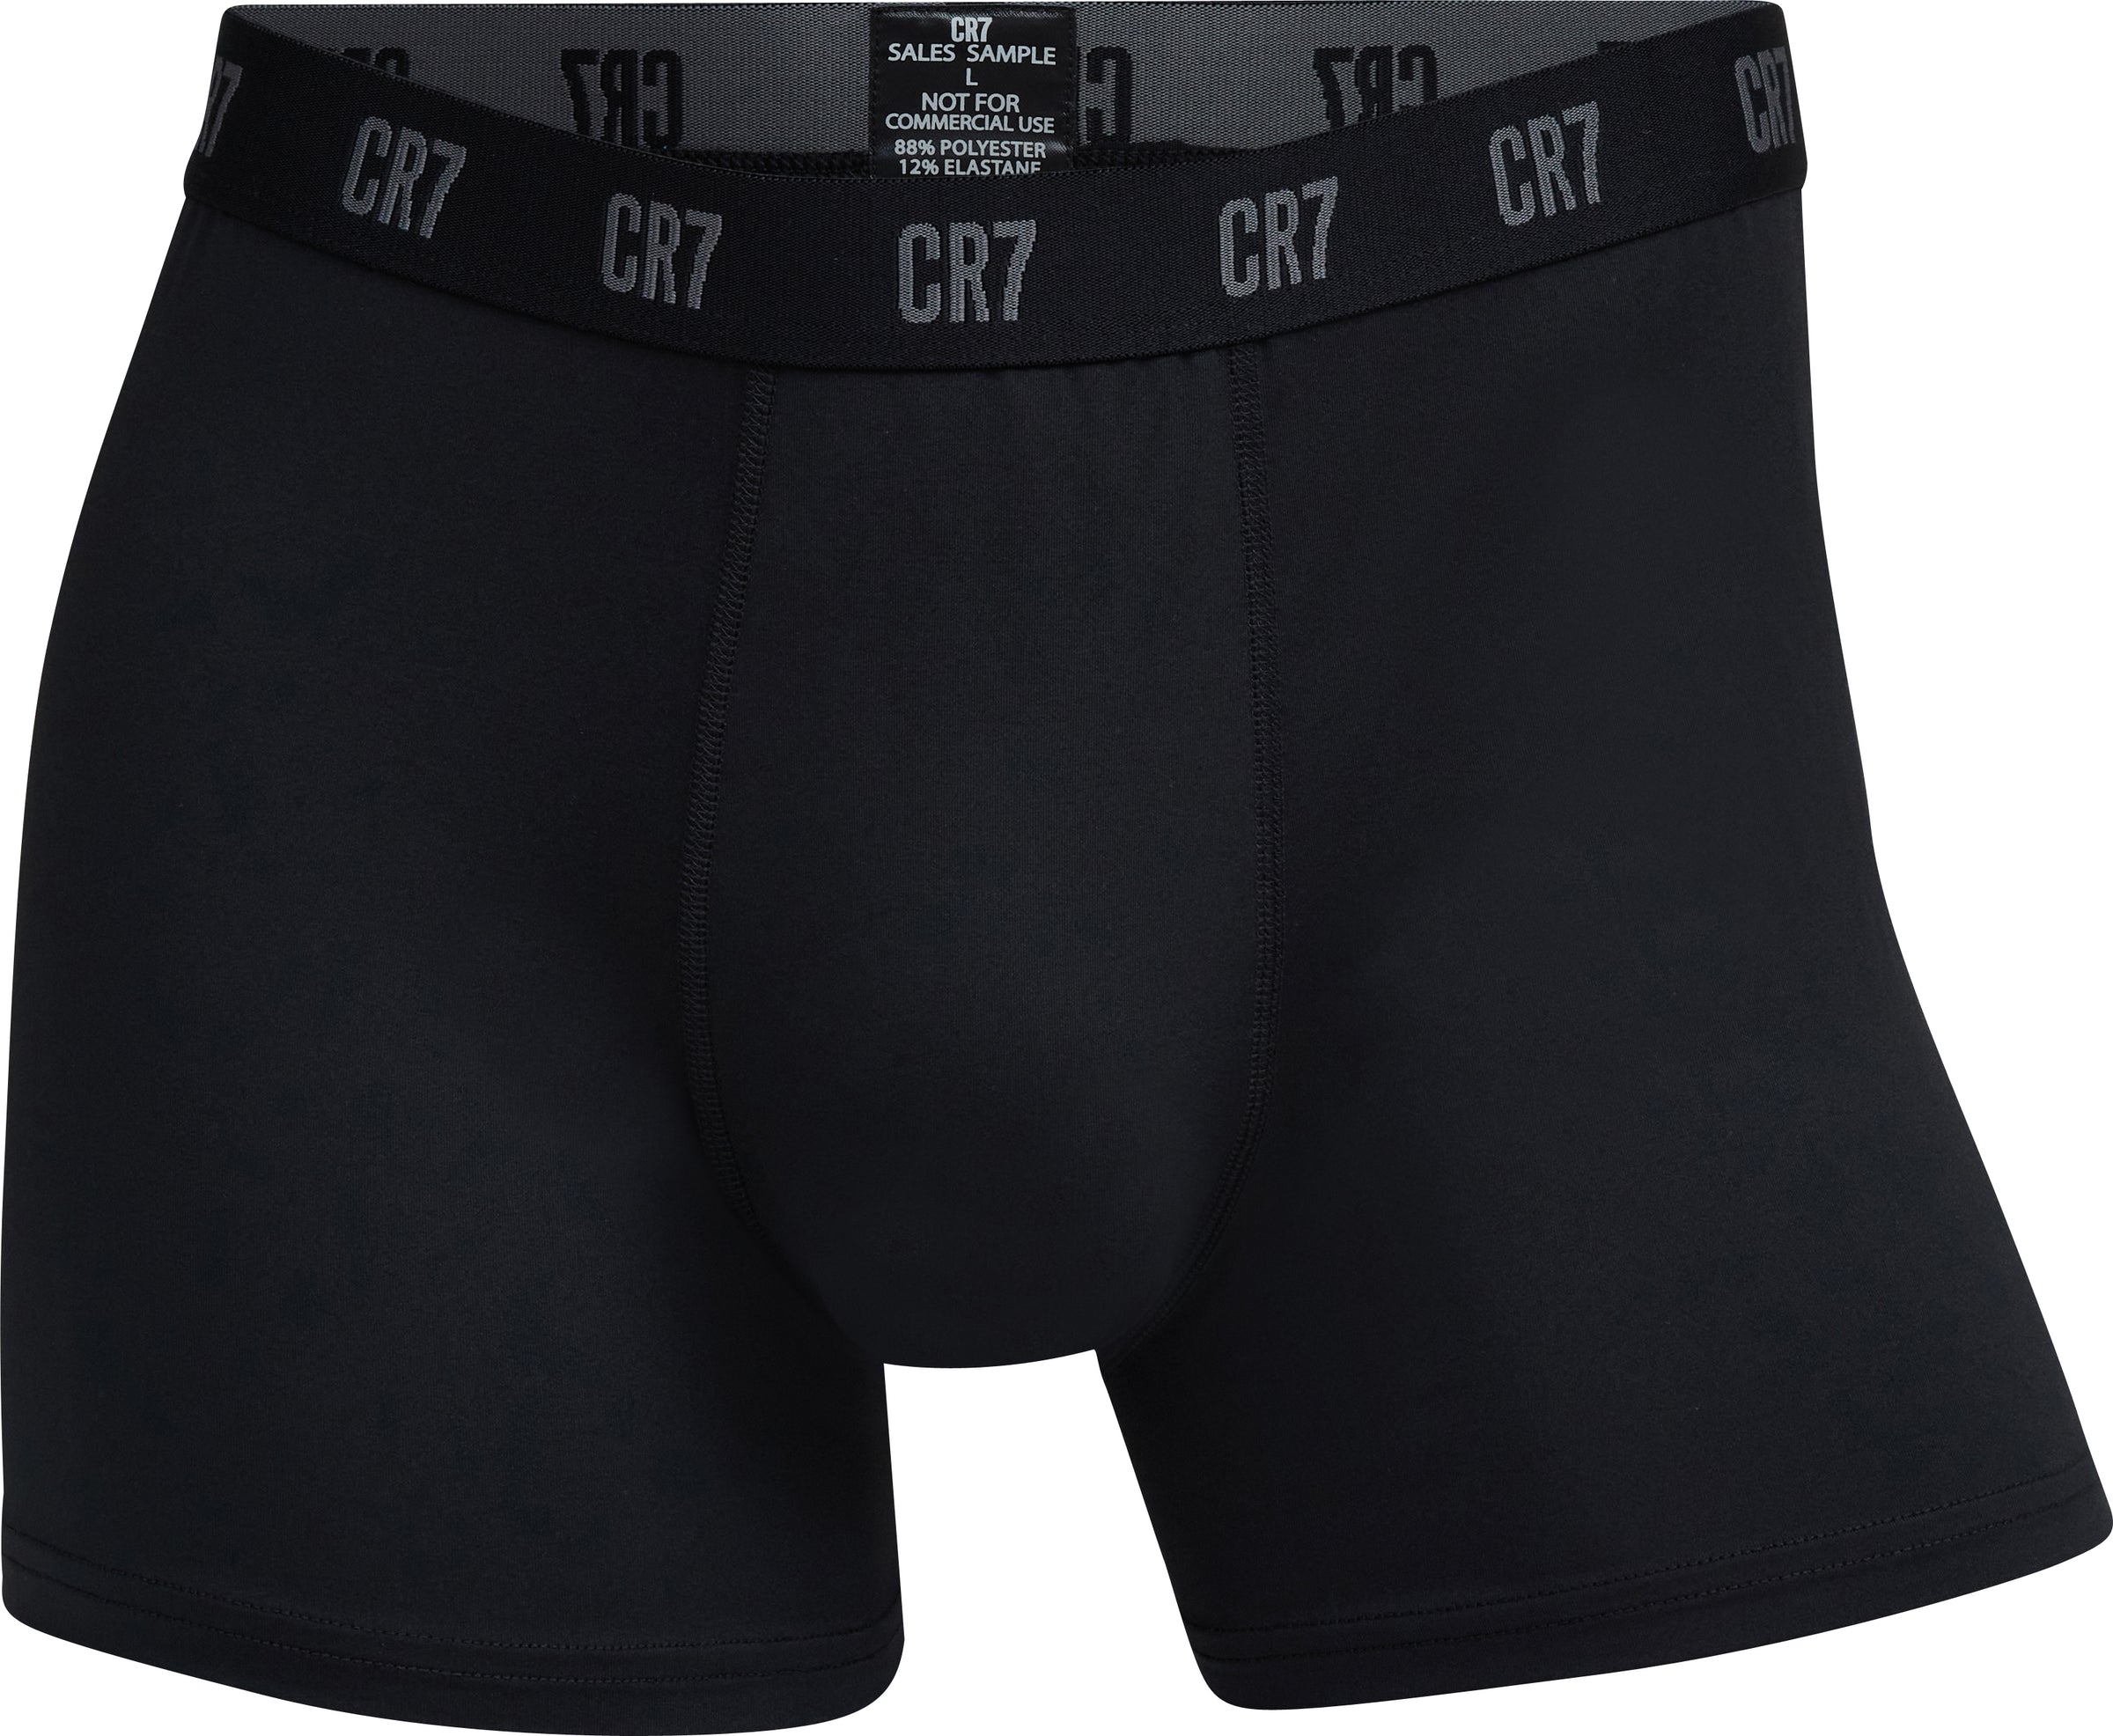 Cristiano Ronaldo CR7 Boxer Brief Underwear Men XL Extra Large Gray White 3  Pack